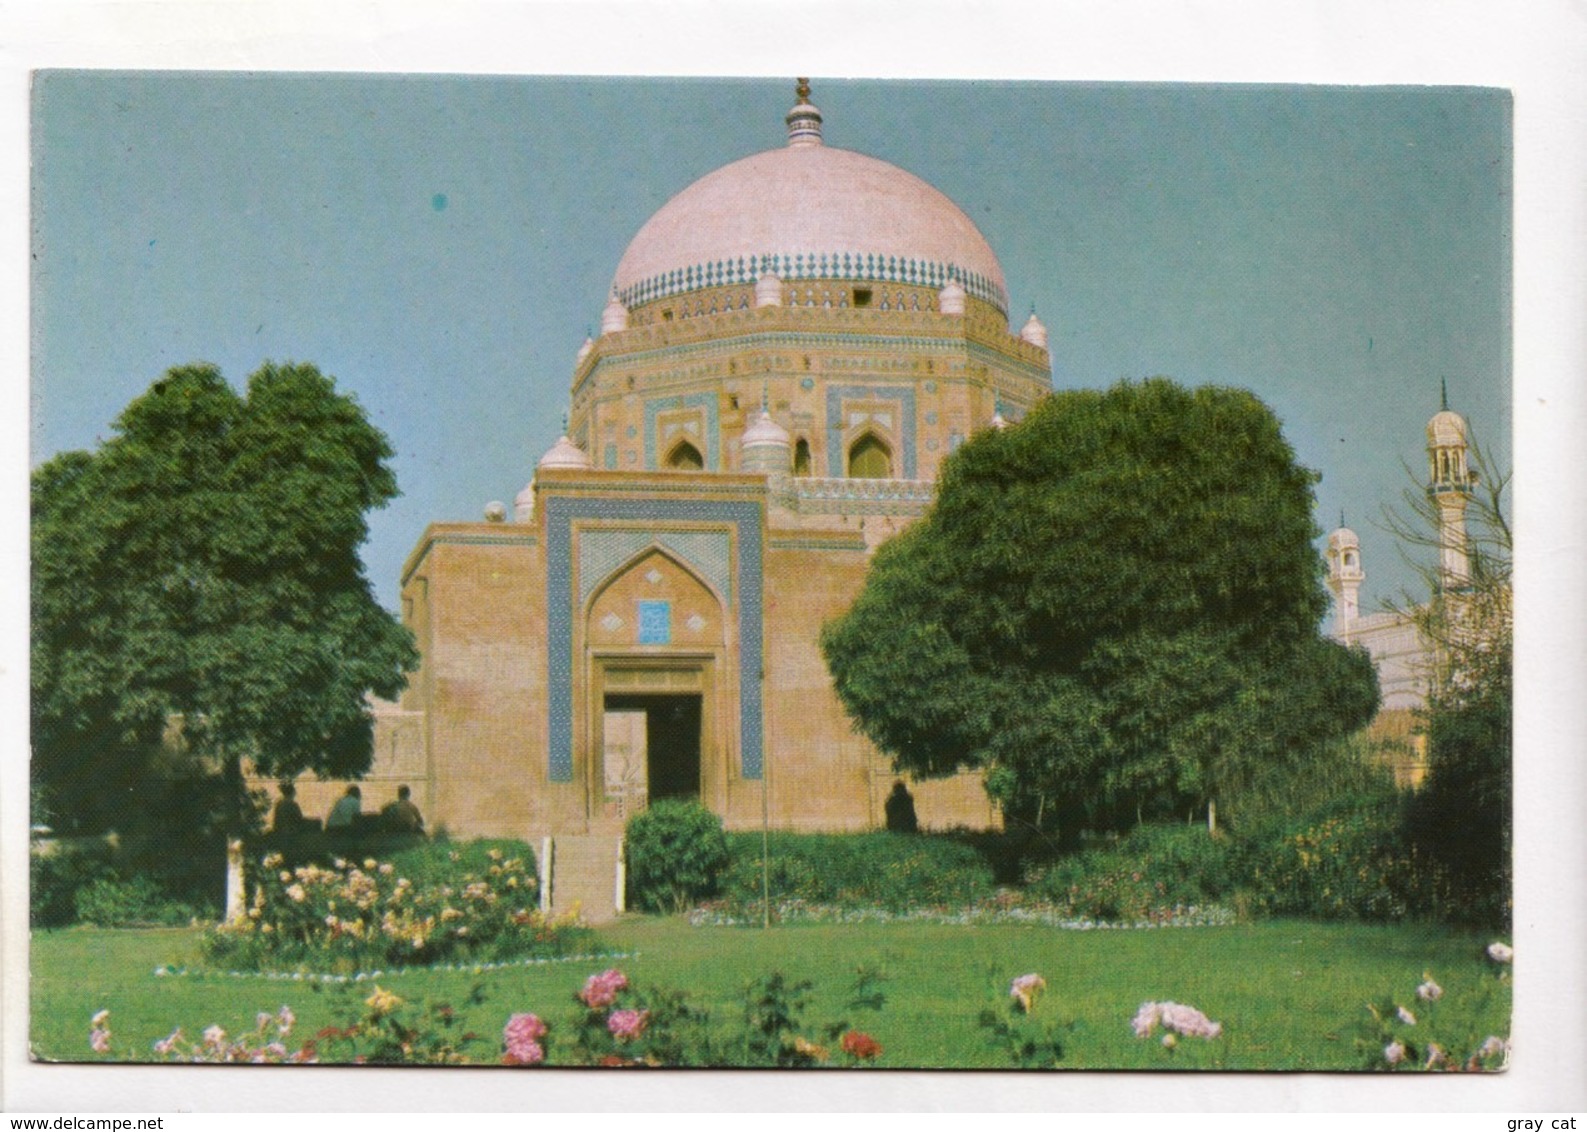 Mausoleum Of Shah Rukn-e-Alam, Multan Pakistan, 1984 Used Postcard [23697] - Pakistan